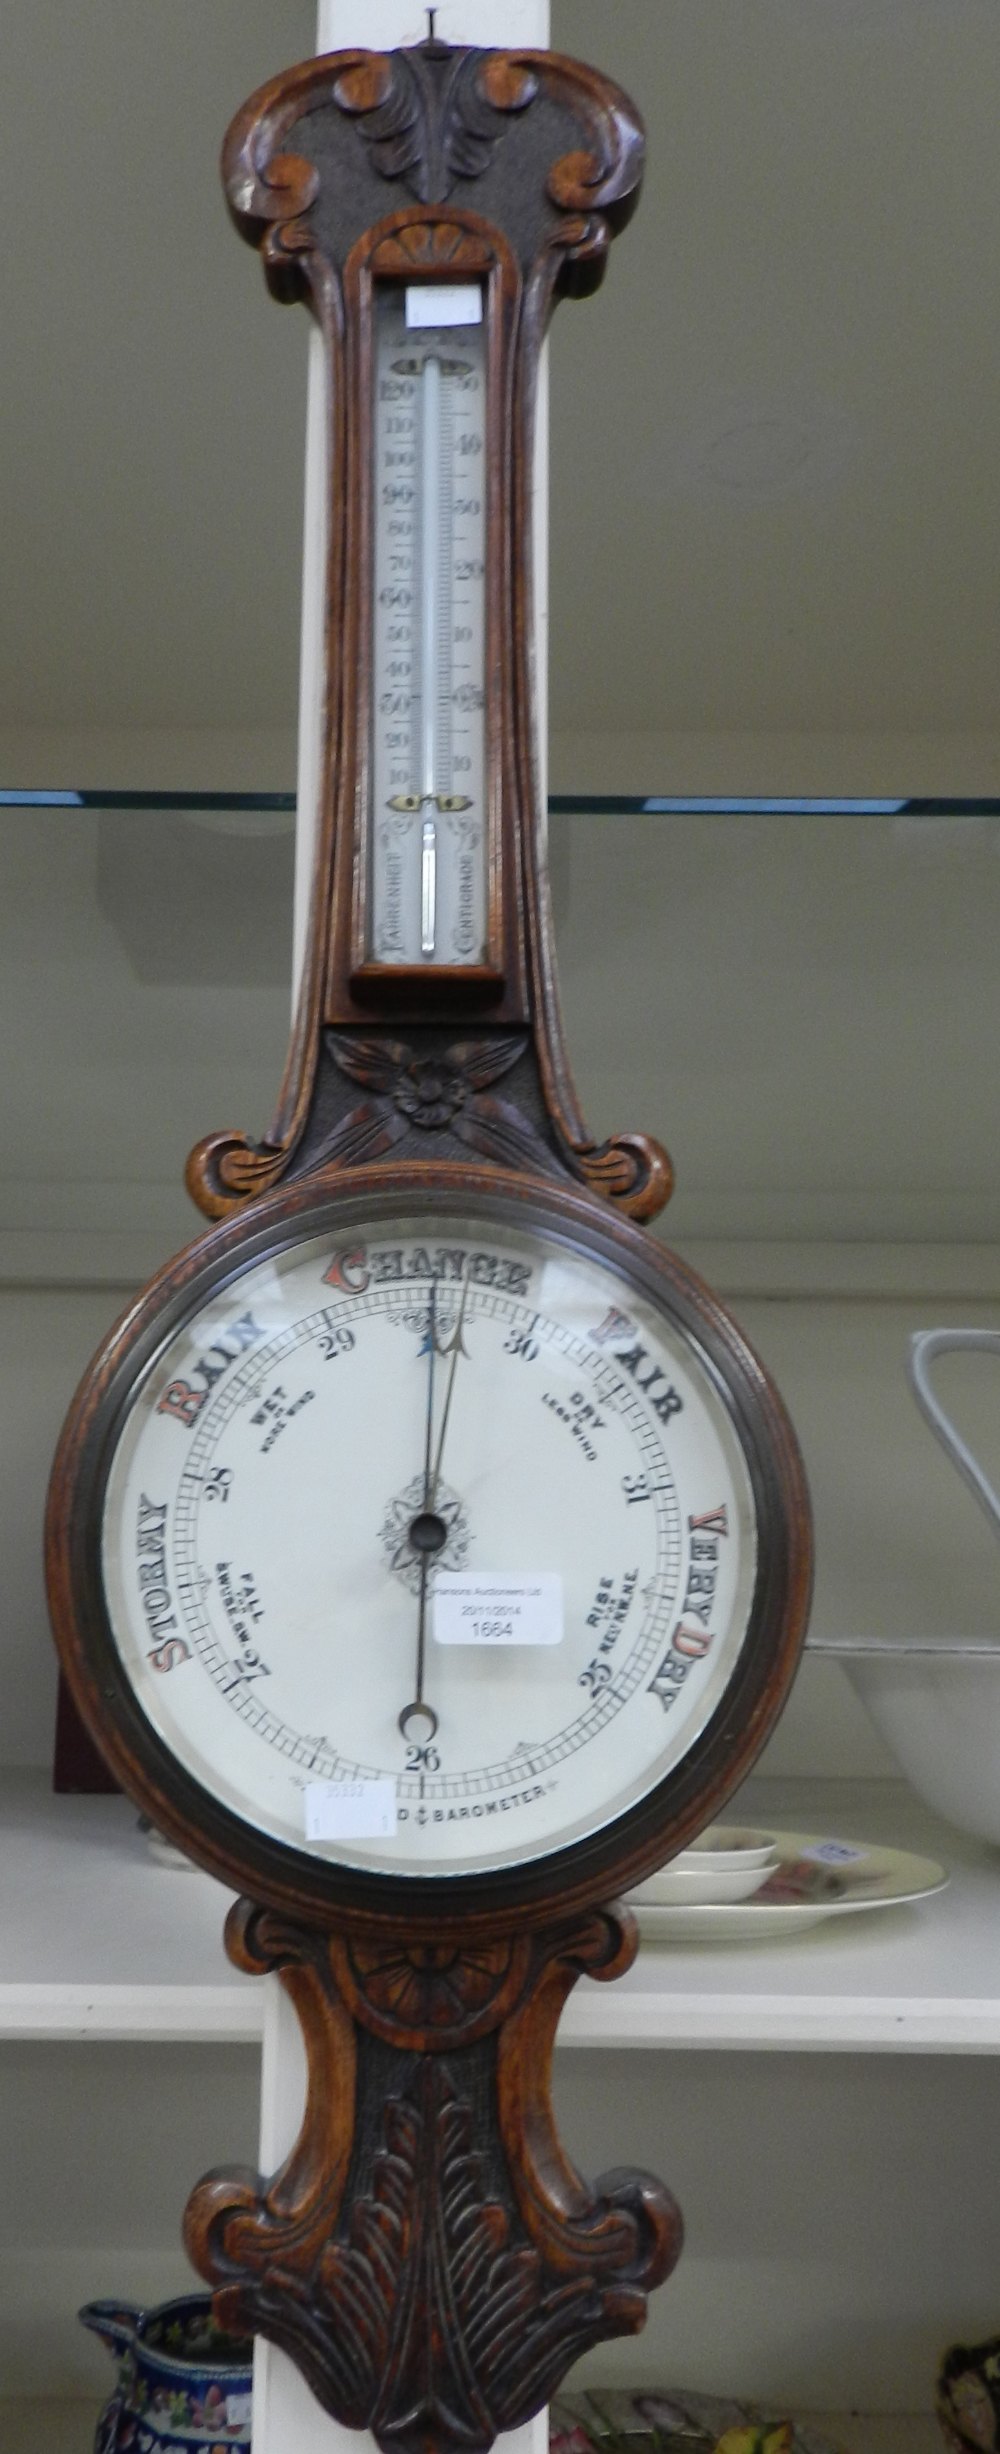 A circa 1910 barometer